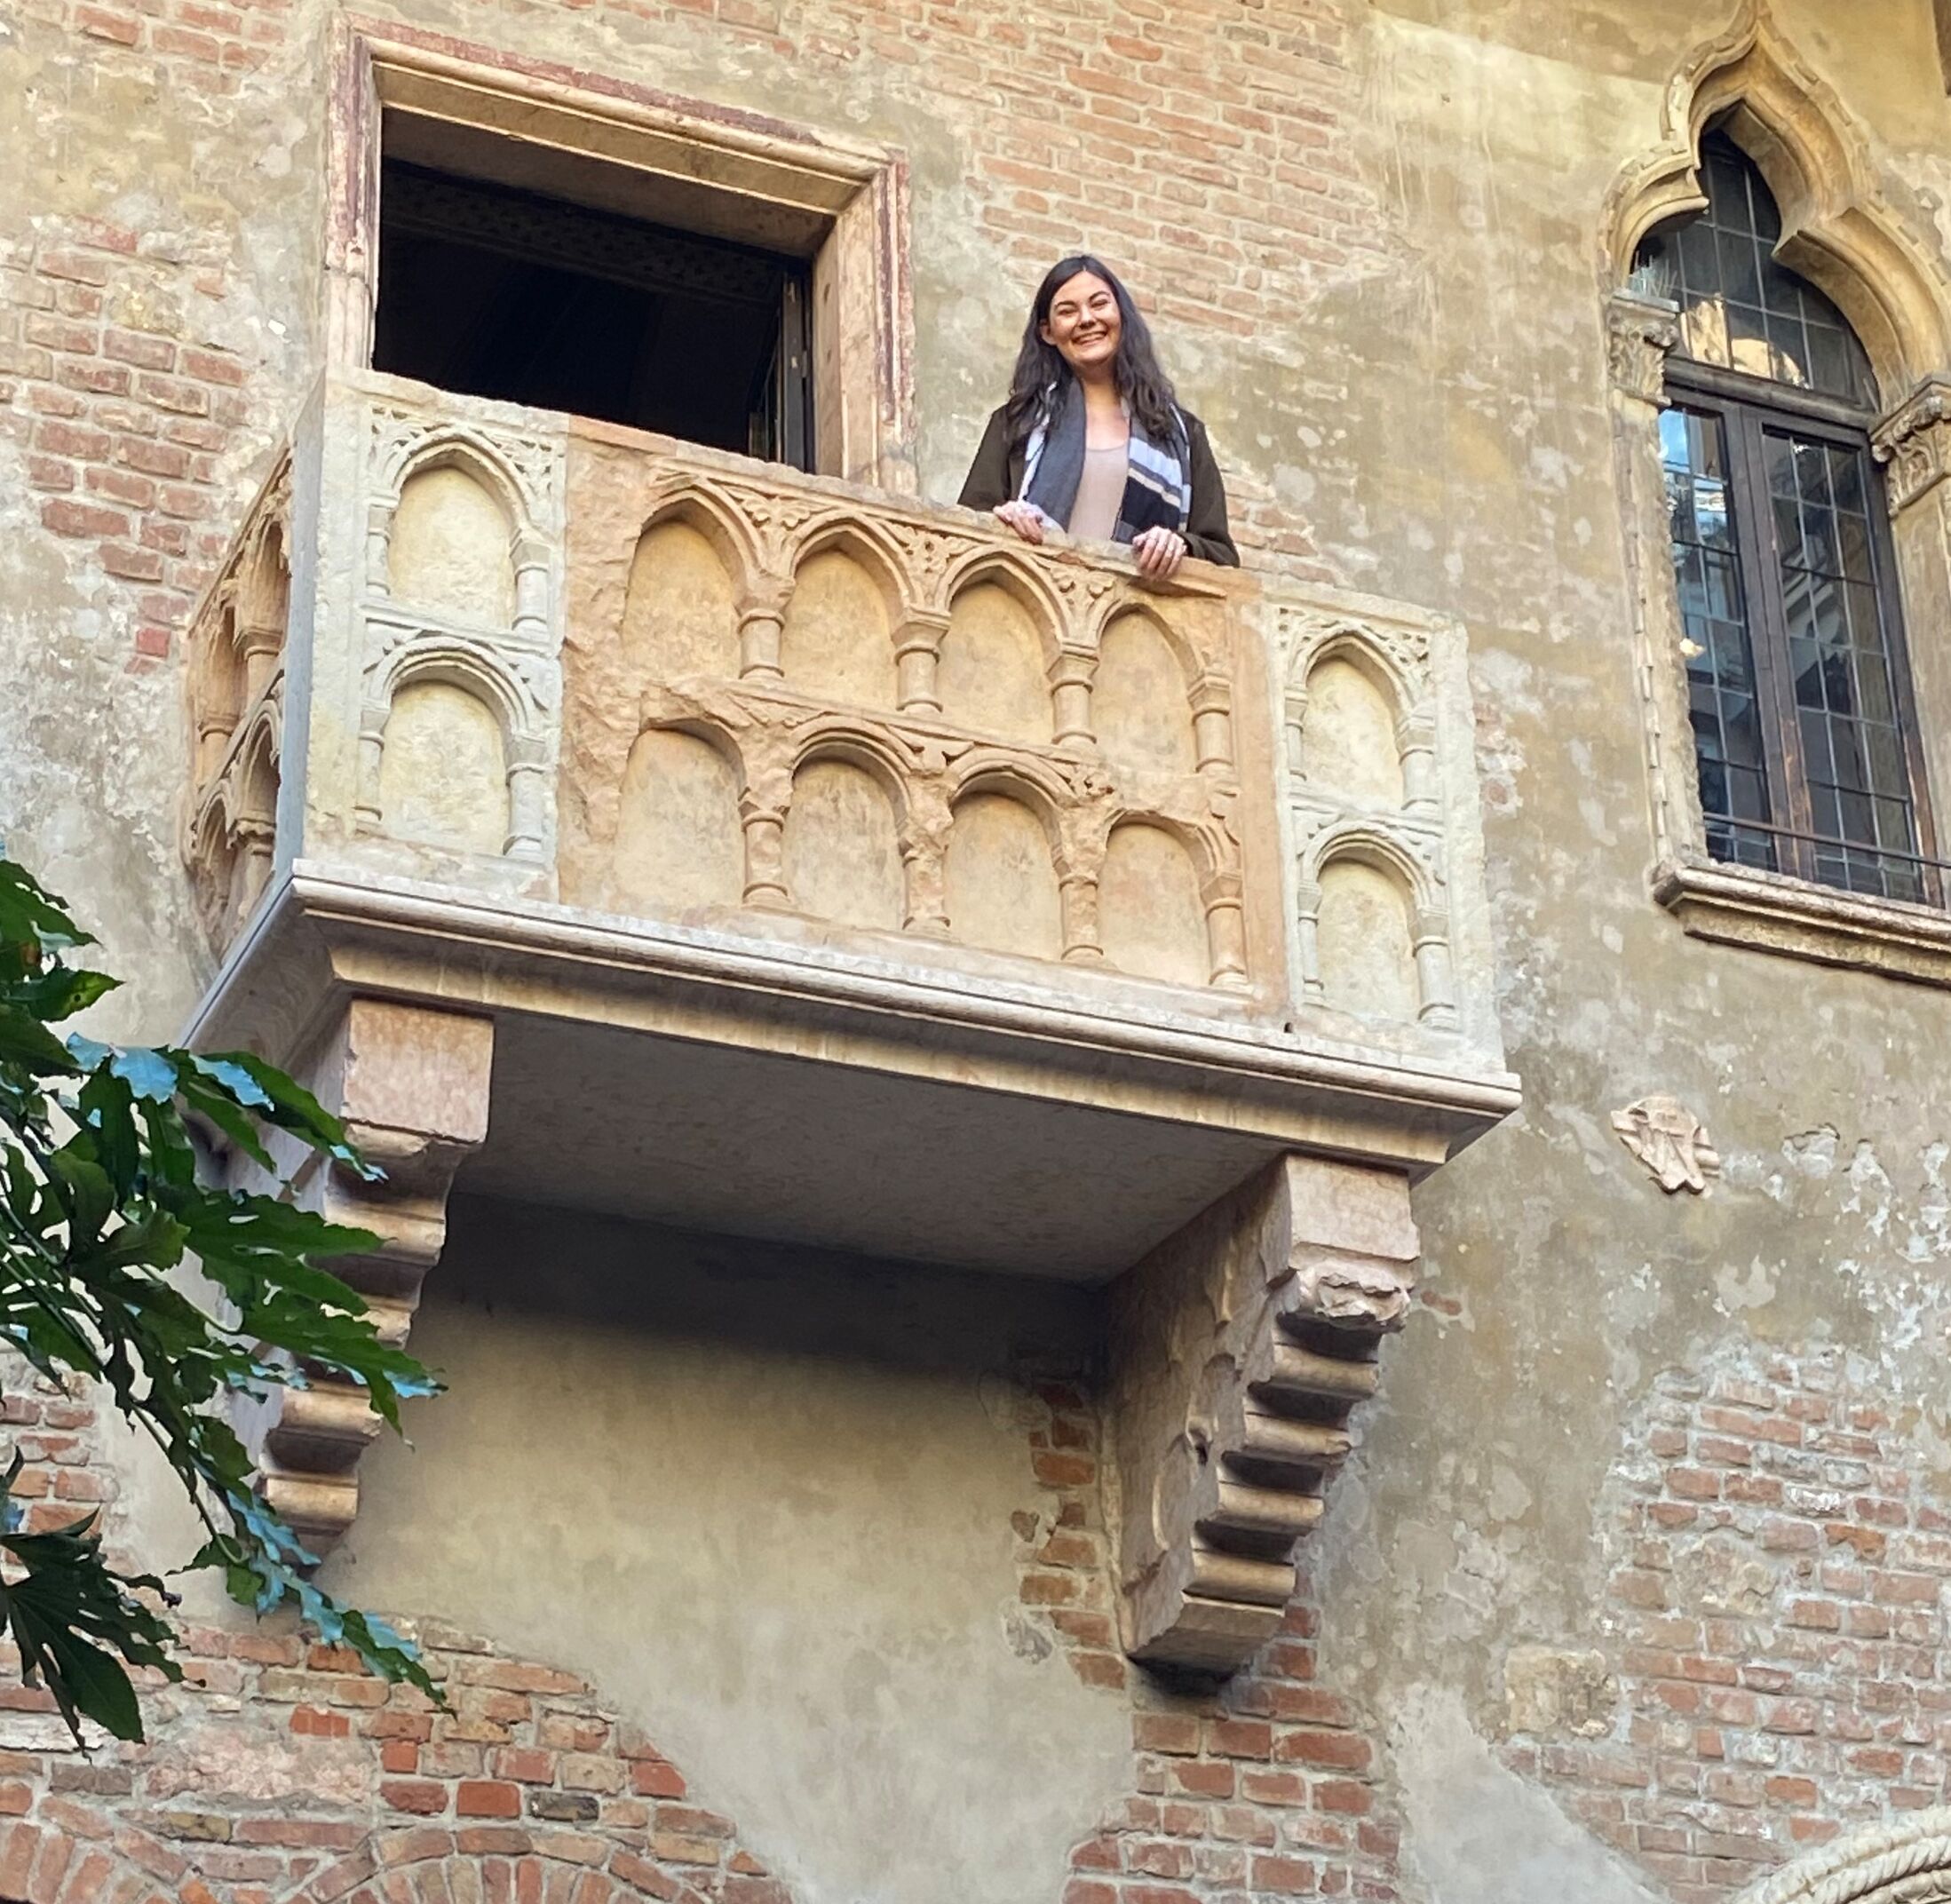 Ellie-Harding-Venice-Verona-Trip-2021-300337-Juliet's Balcony with Ellie Verona-edit